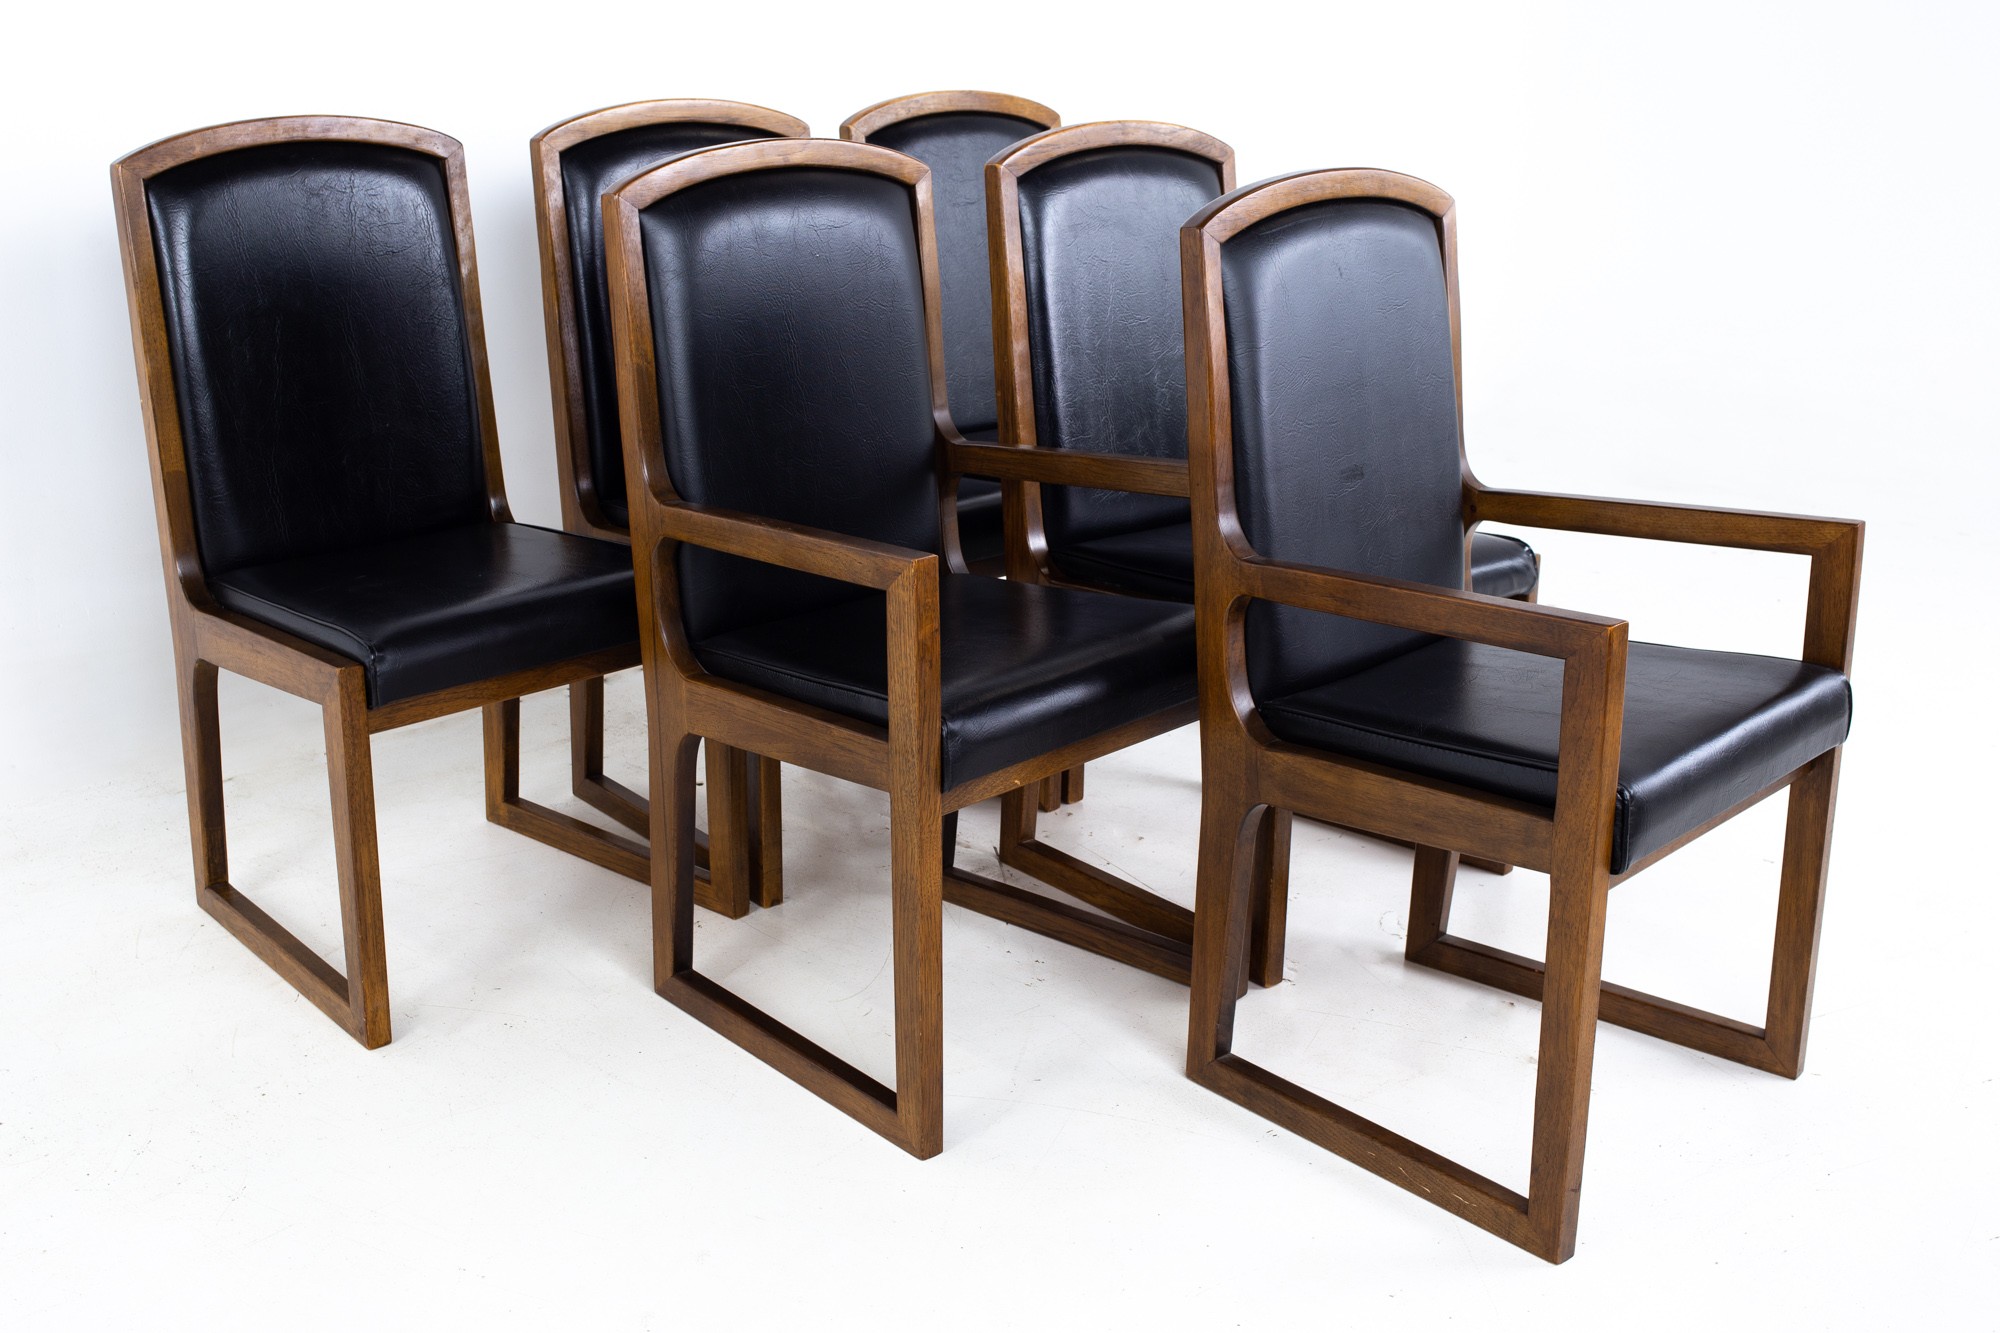 Thomasville Mid Century Walnut and Black Naugahyde Sleigh Leg Dining Chairs - Set of 6